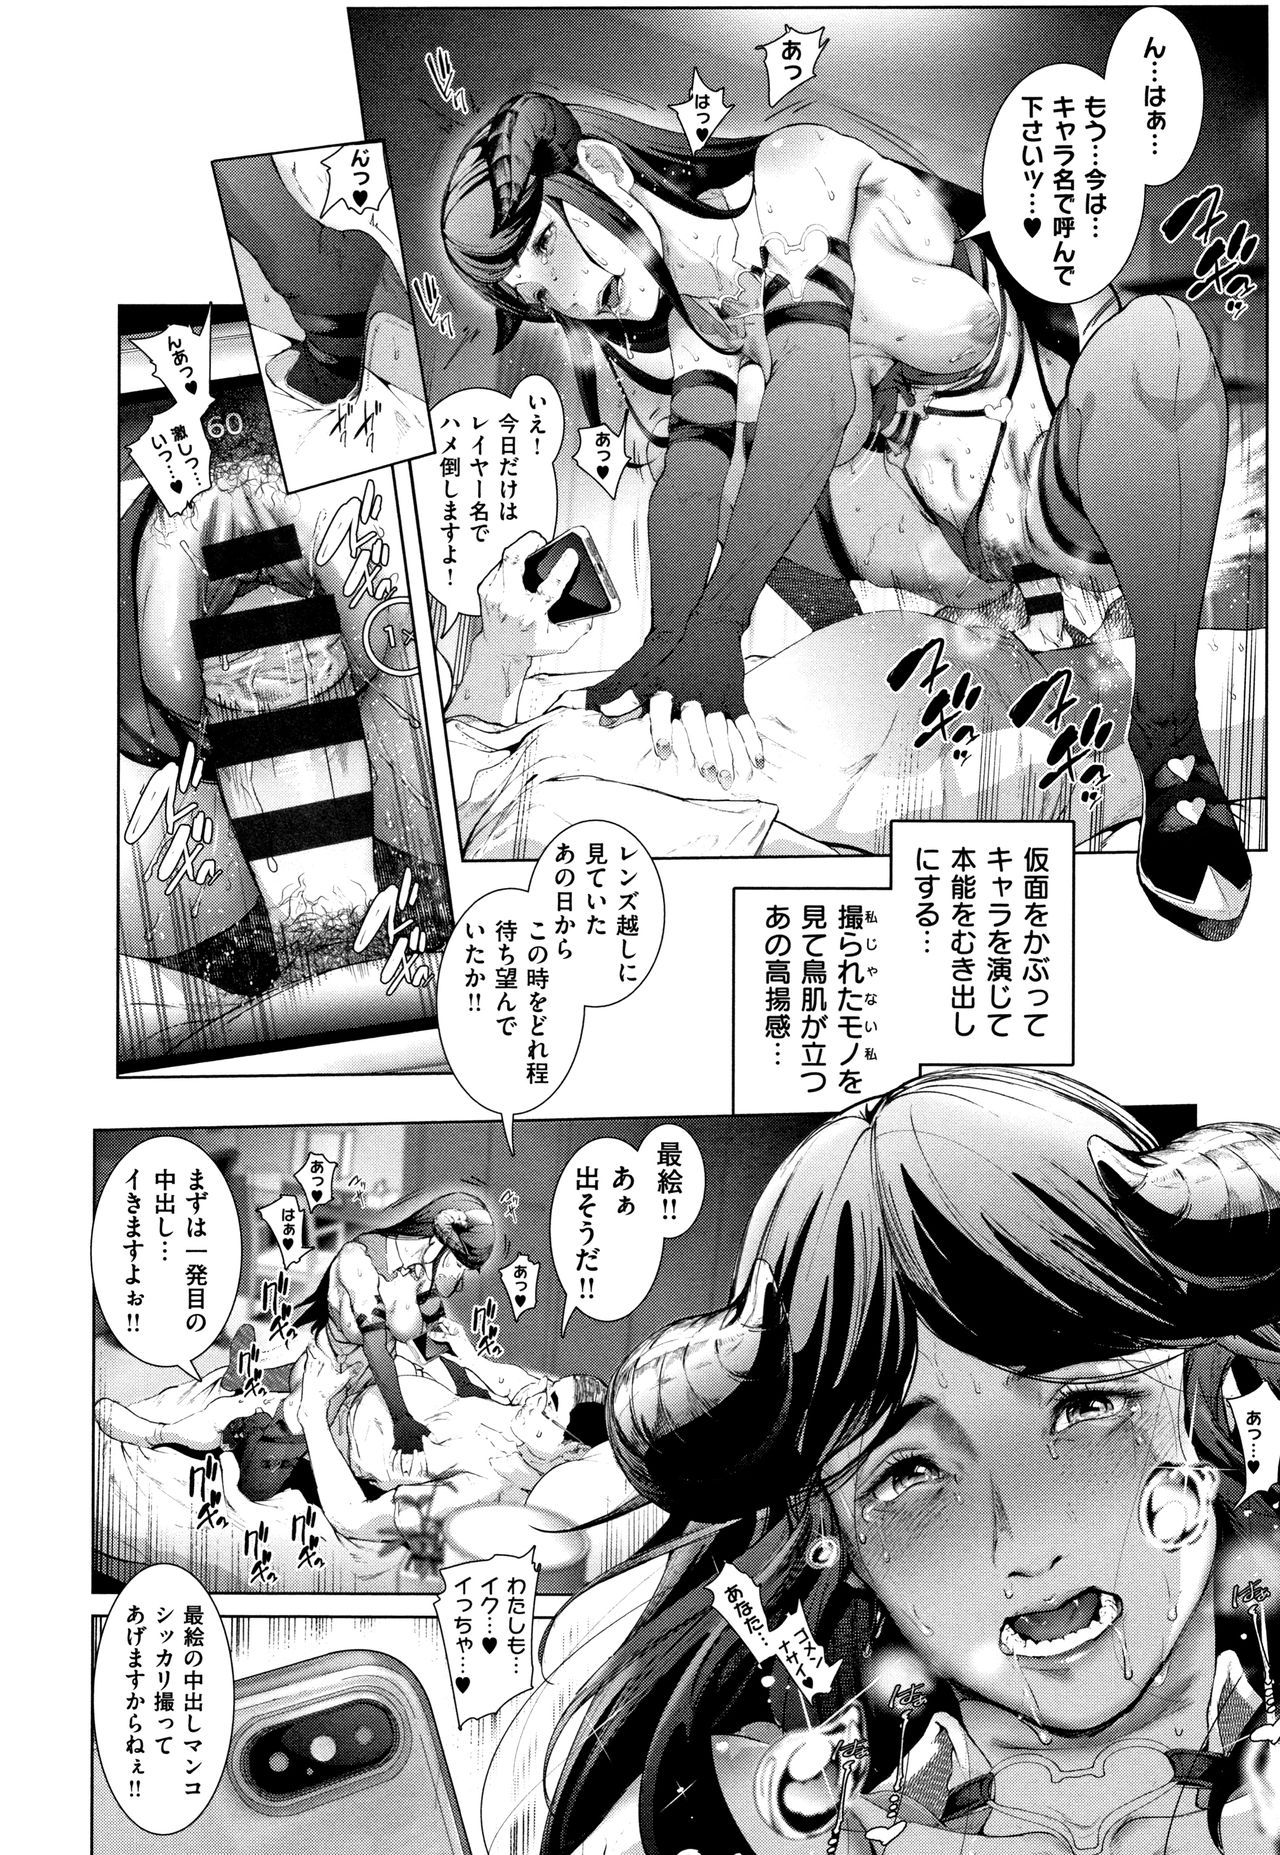 [Suzuhane Suzu] Cos wa Midara na Kamen Shogyouban - Cosplay is a mask [wakes up erotic personality...] 80